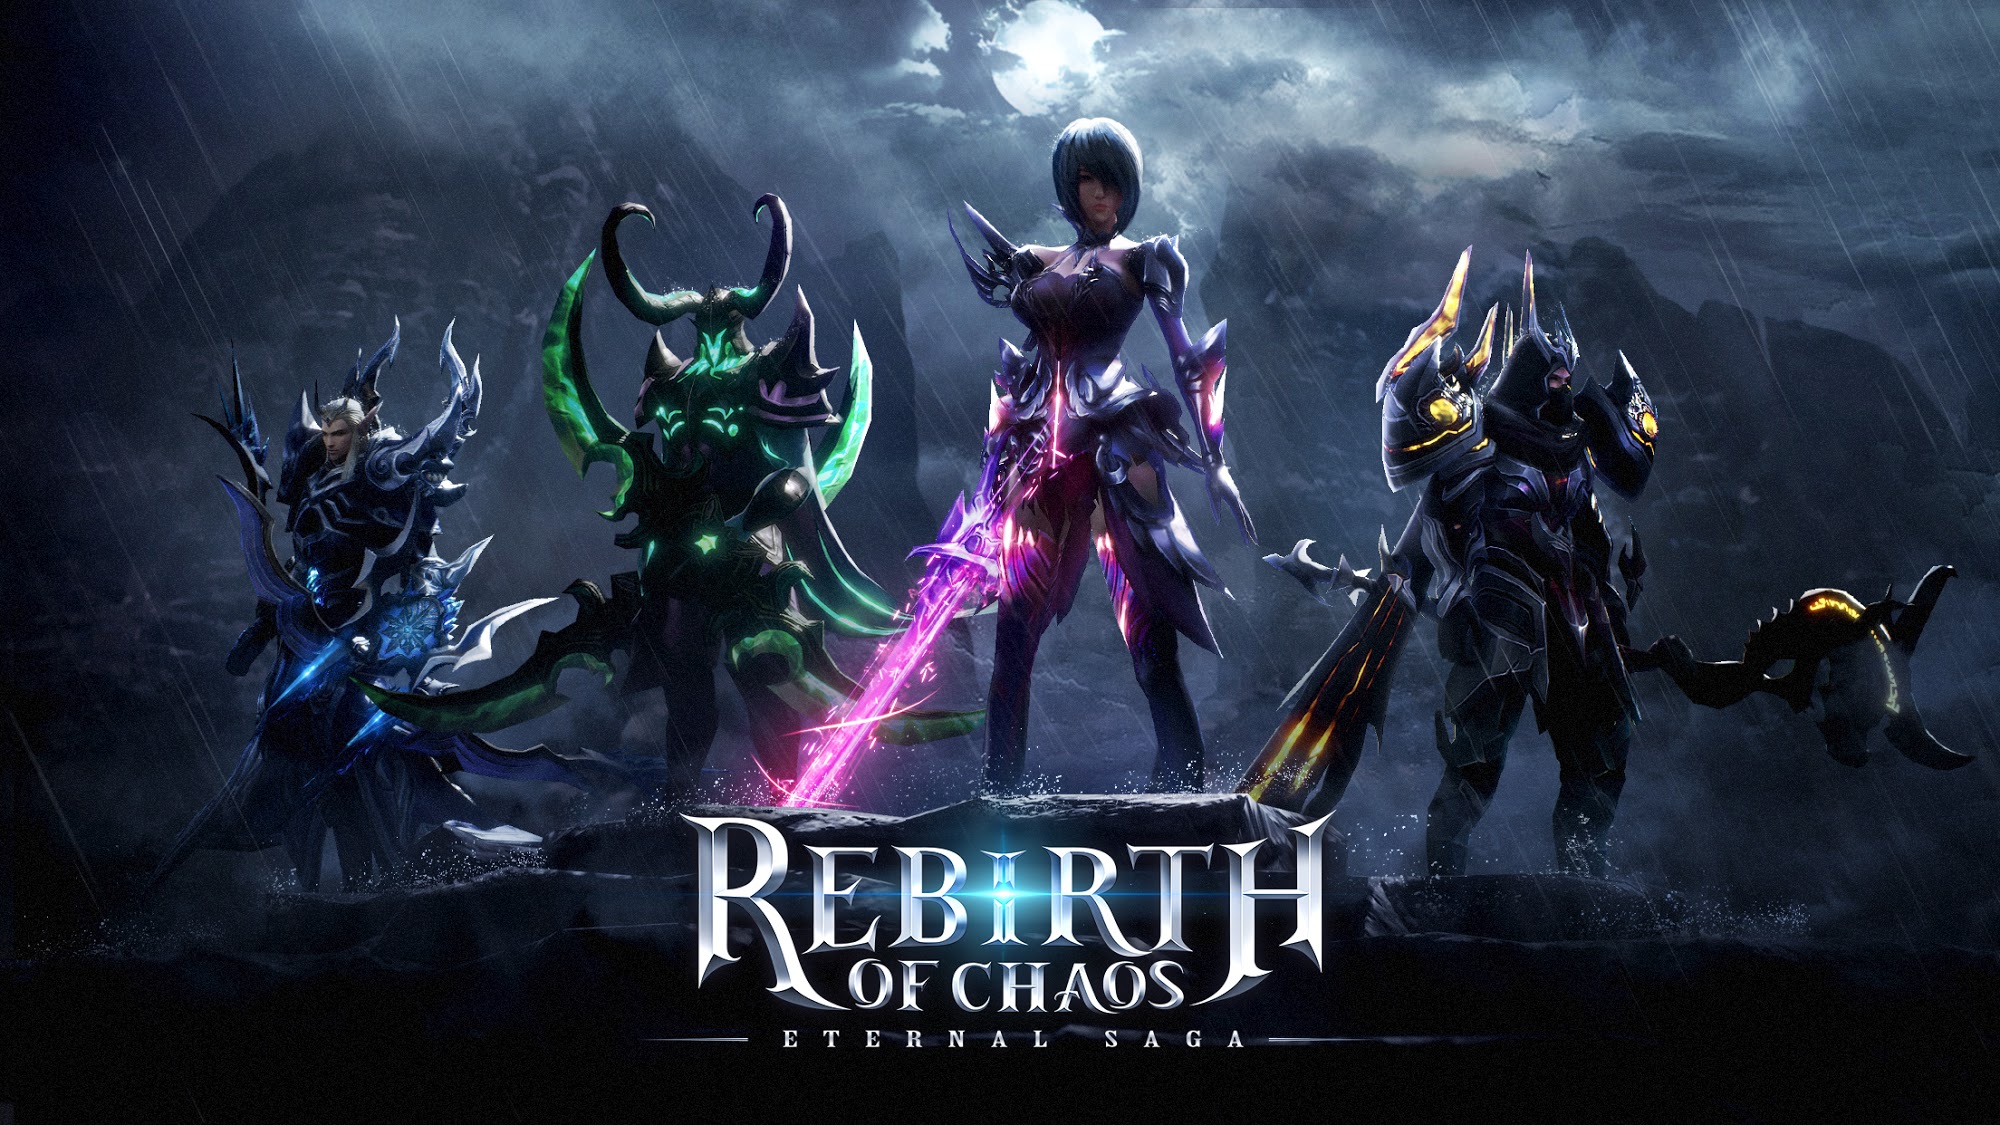 Baixar Rebirth of Chaos: Eternal saga para Android grátis.